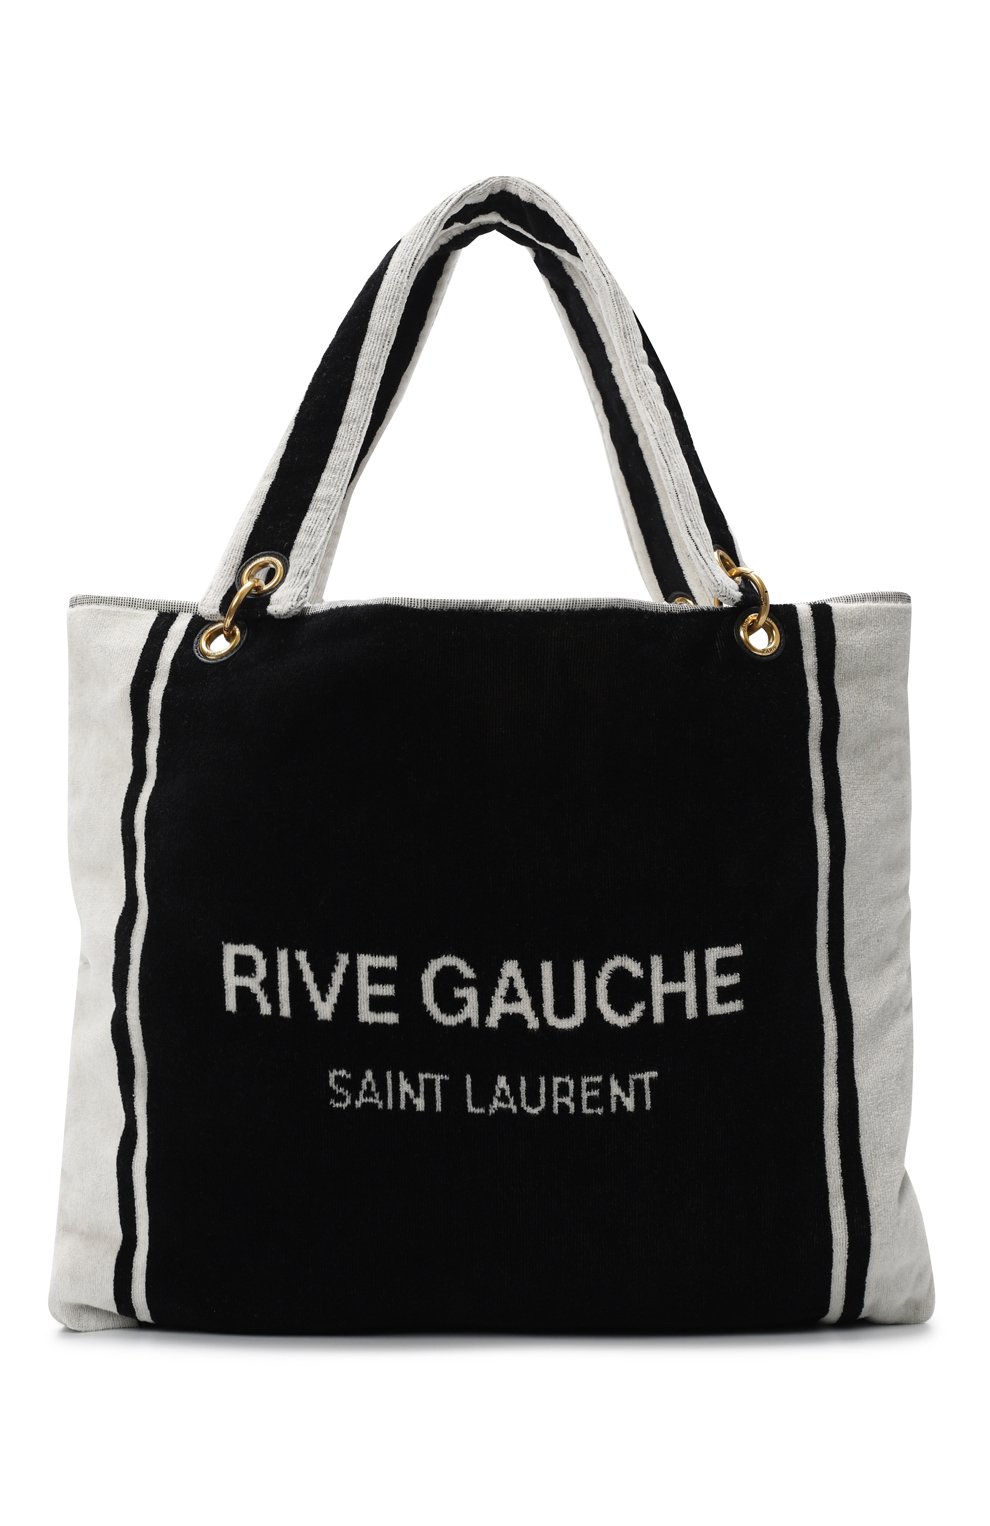 Сумка Rive Gauche Towel | Saint Laurent | Чёрно-белый - 1